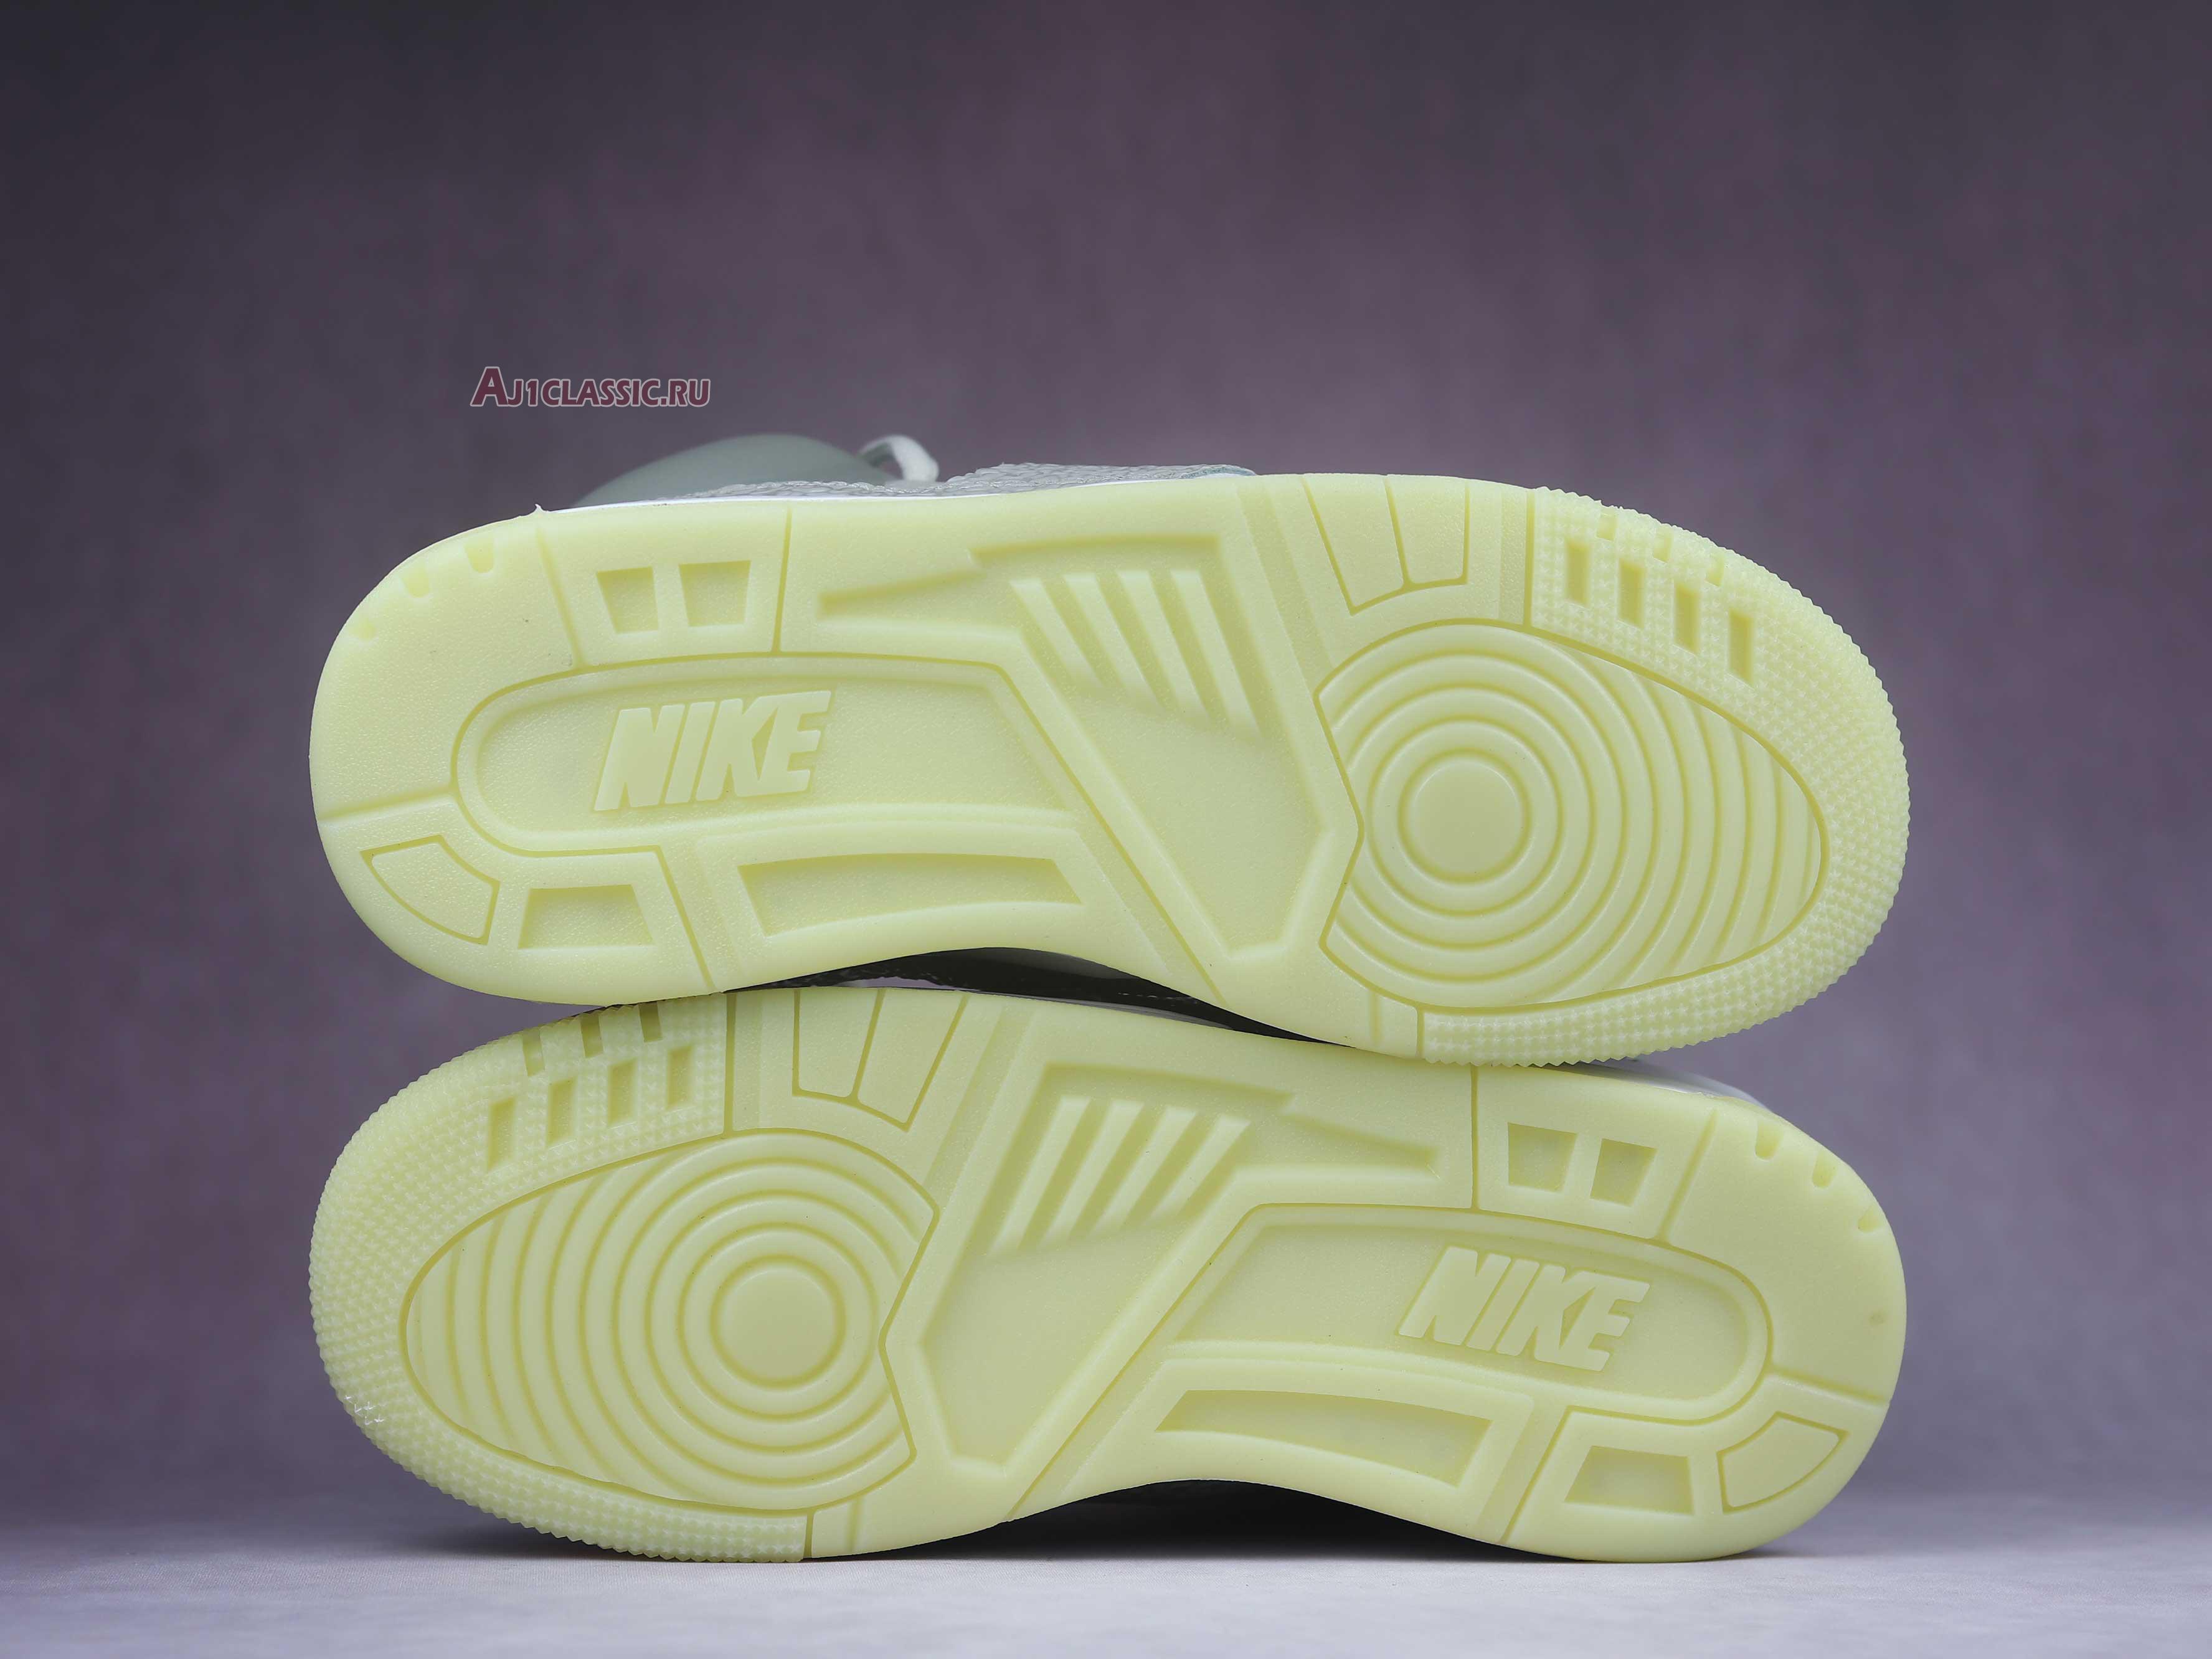 Nike Air Yeezy 1 "Zen Grey" 366164-002